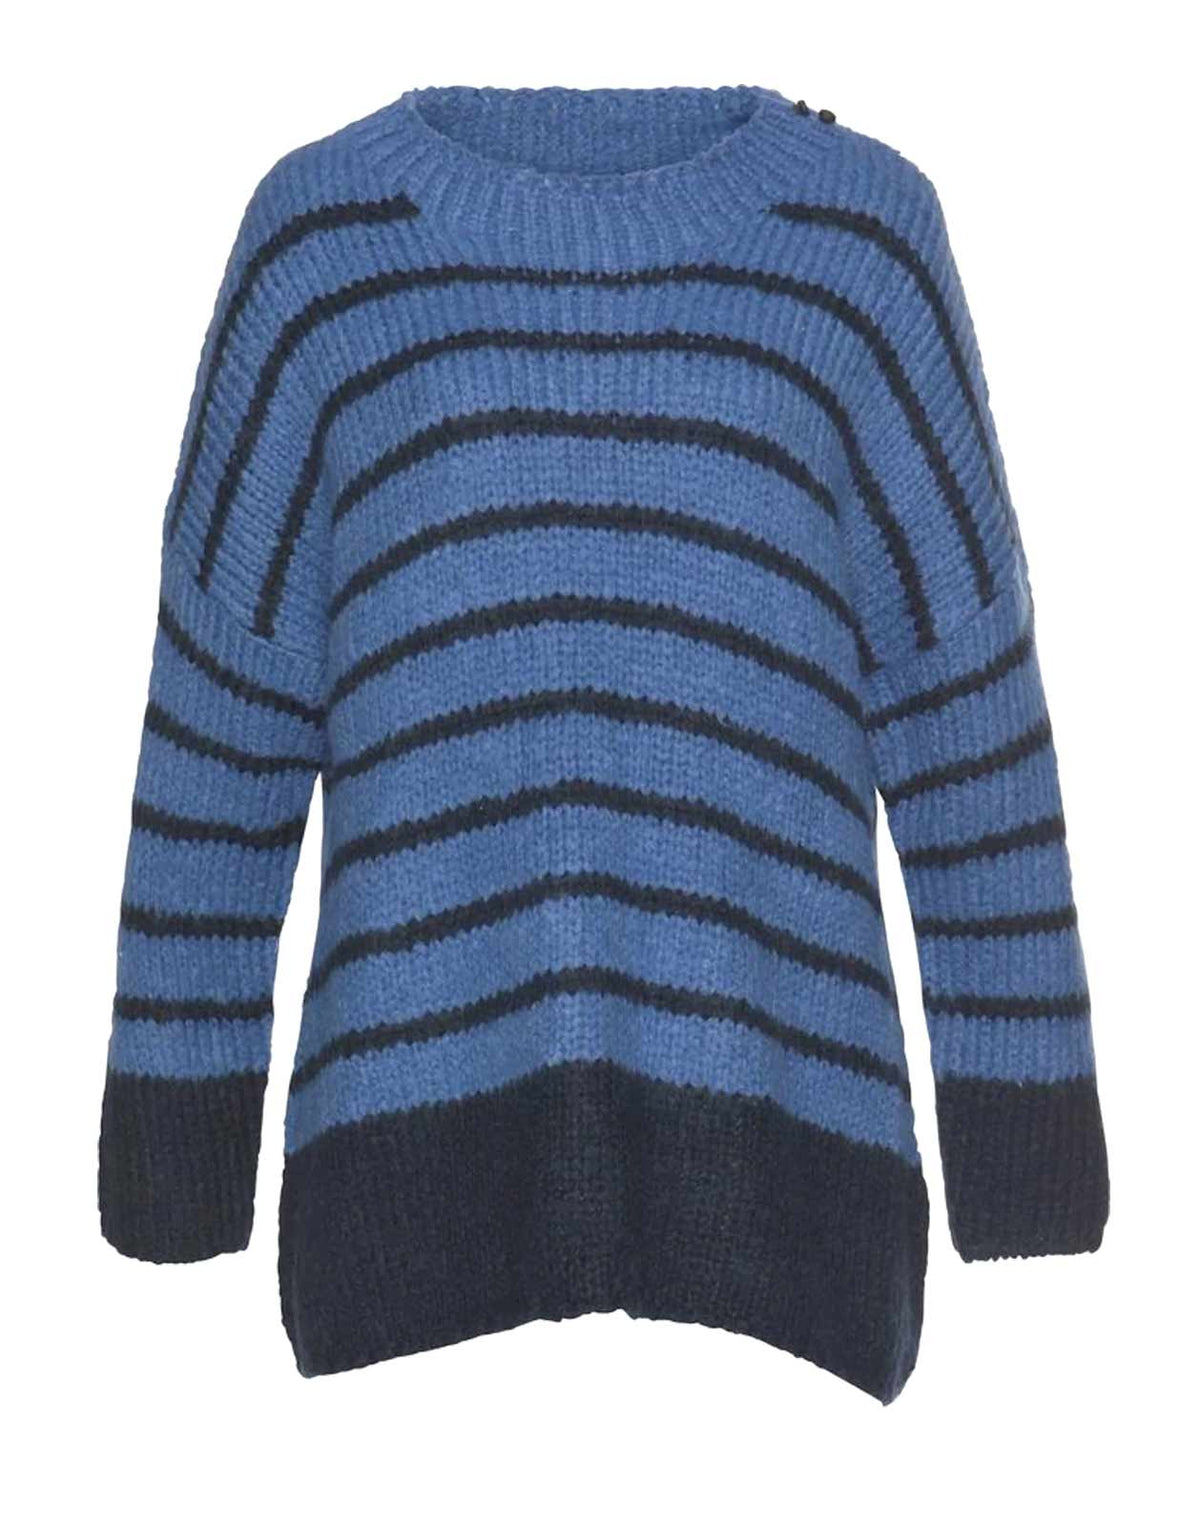 Replay Damen Marken-Oversized-Pullover, blau-marine